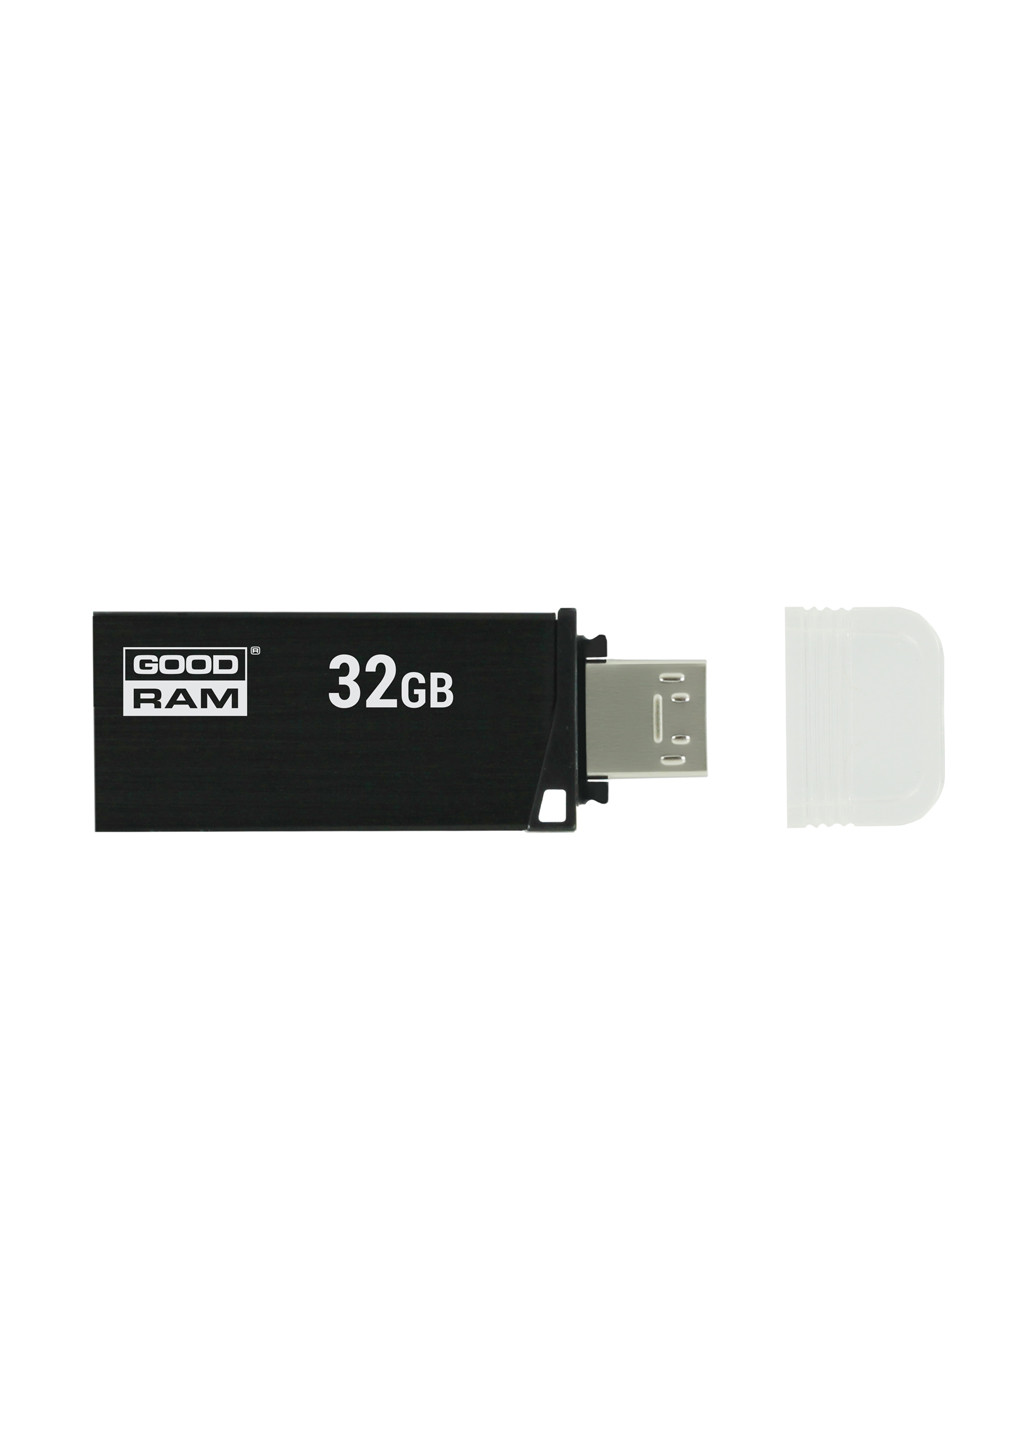 Флеш память USB OTN3 32GB Black (OTN3-0320K0R11) Goodram флеш память usb goodram otn3 32gb black (otn3-0320k0r11) (134201730)